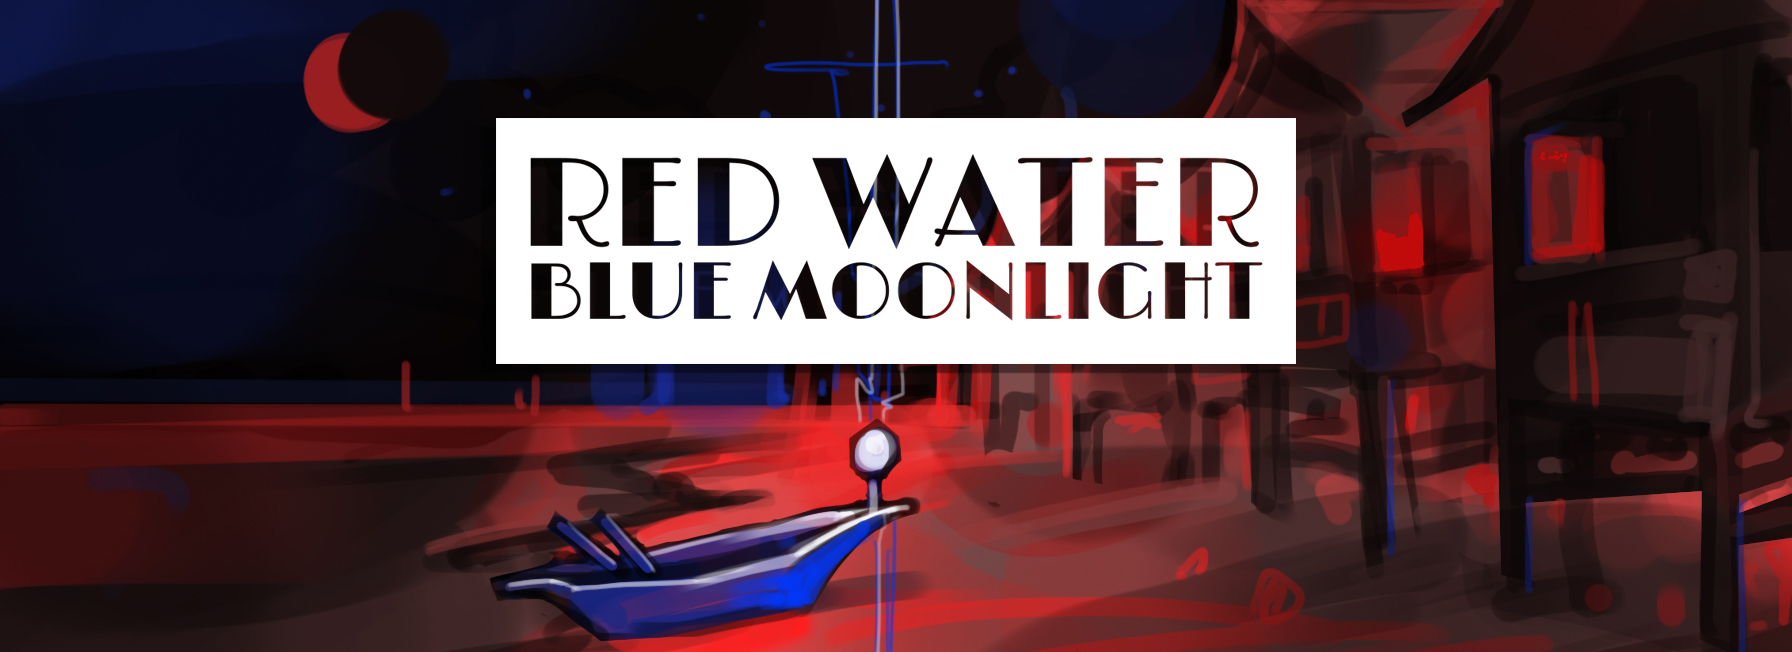 Red Water - Blue Moonlight